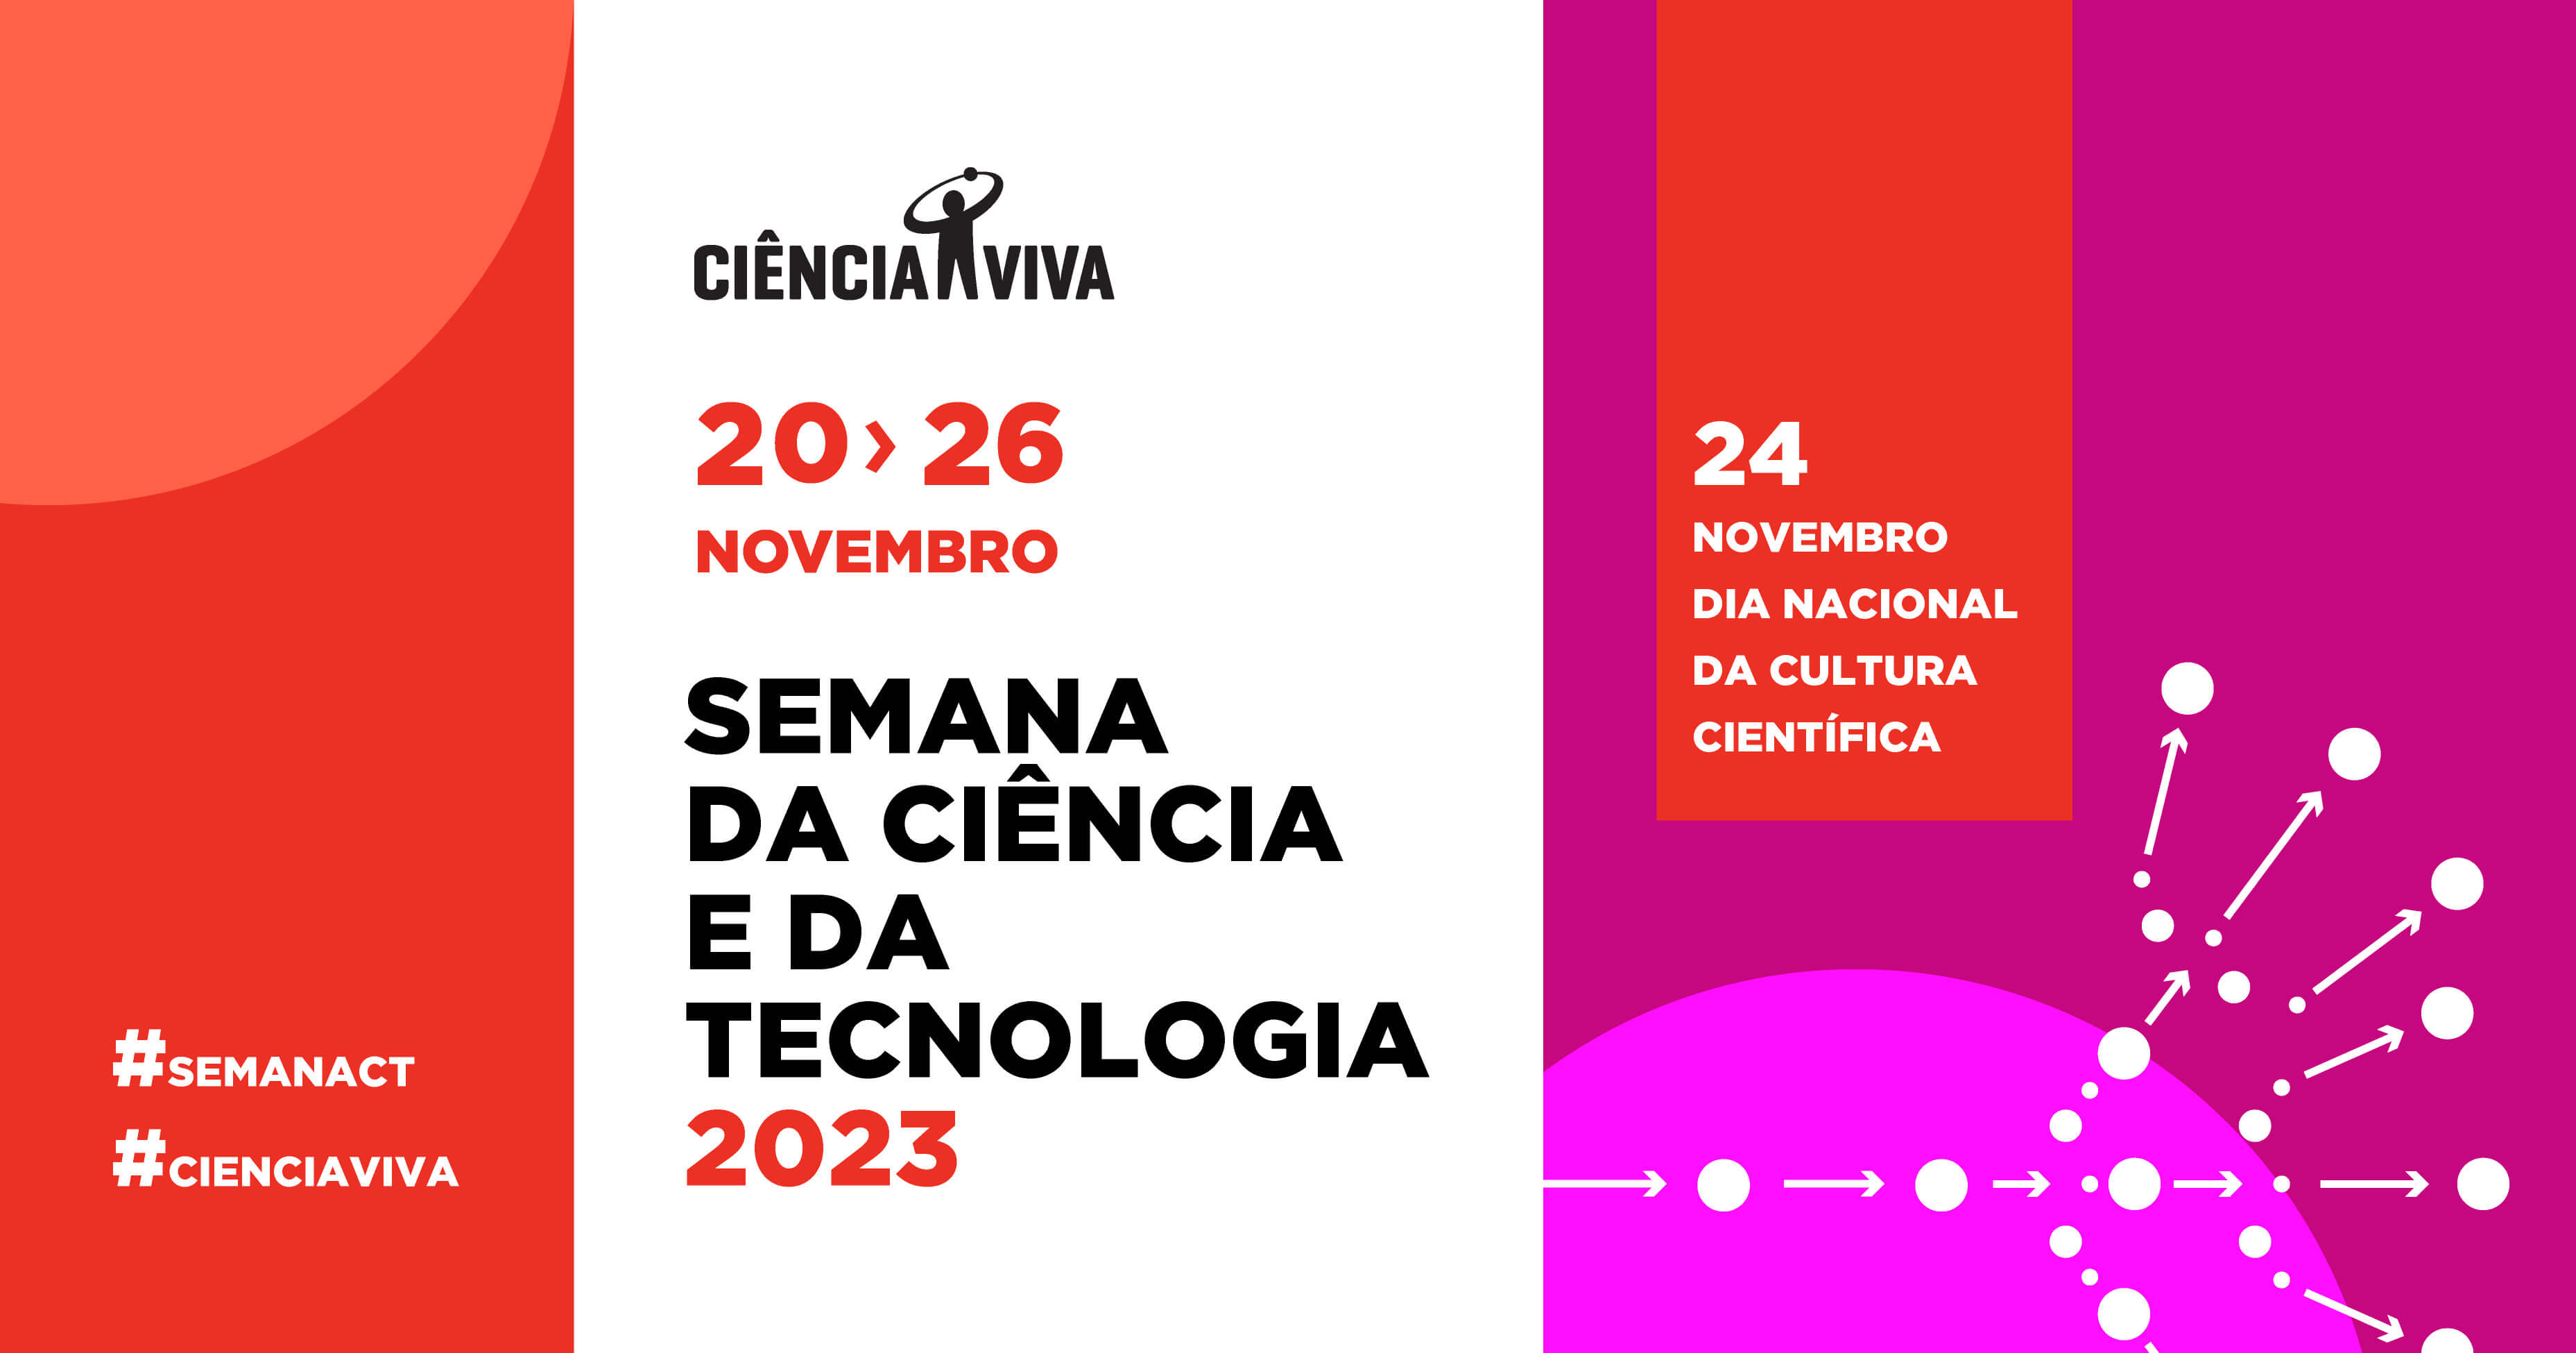 IHC na Semana da Ciência e Tecnologia 2023